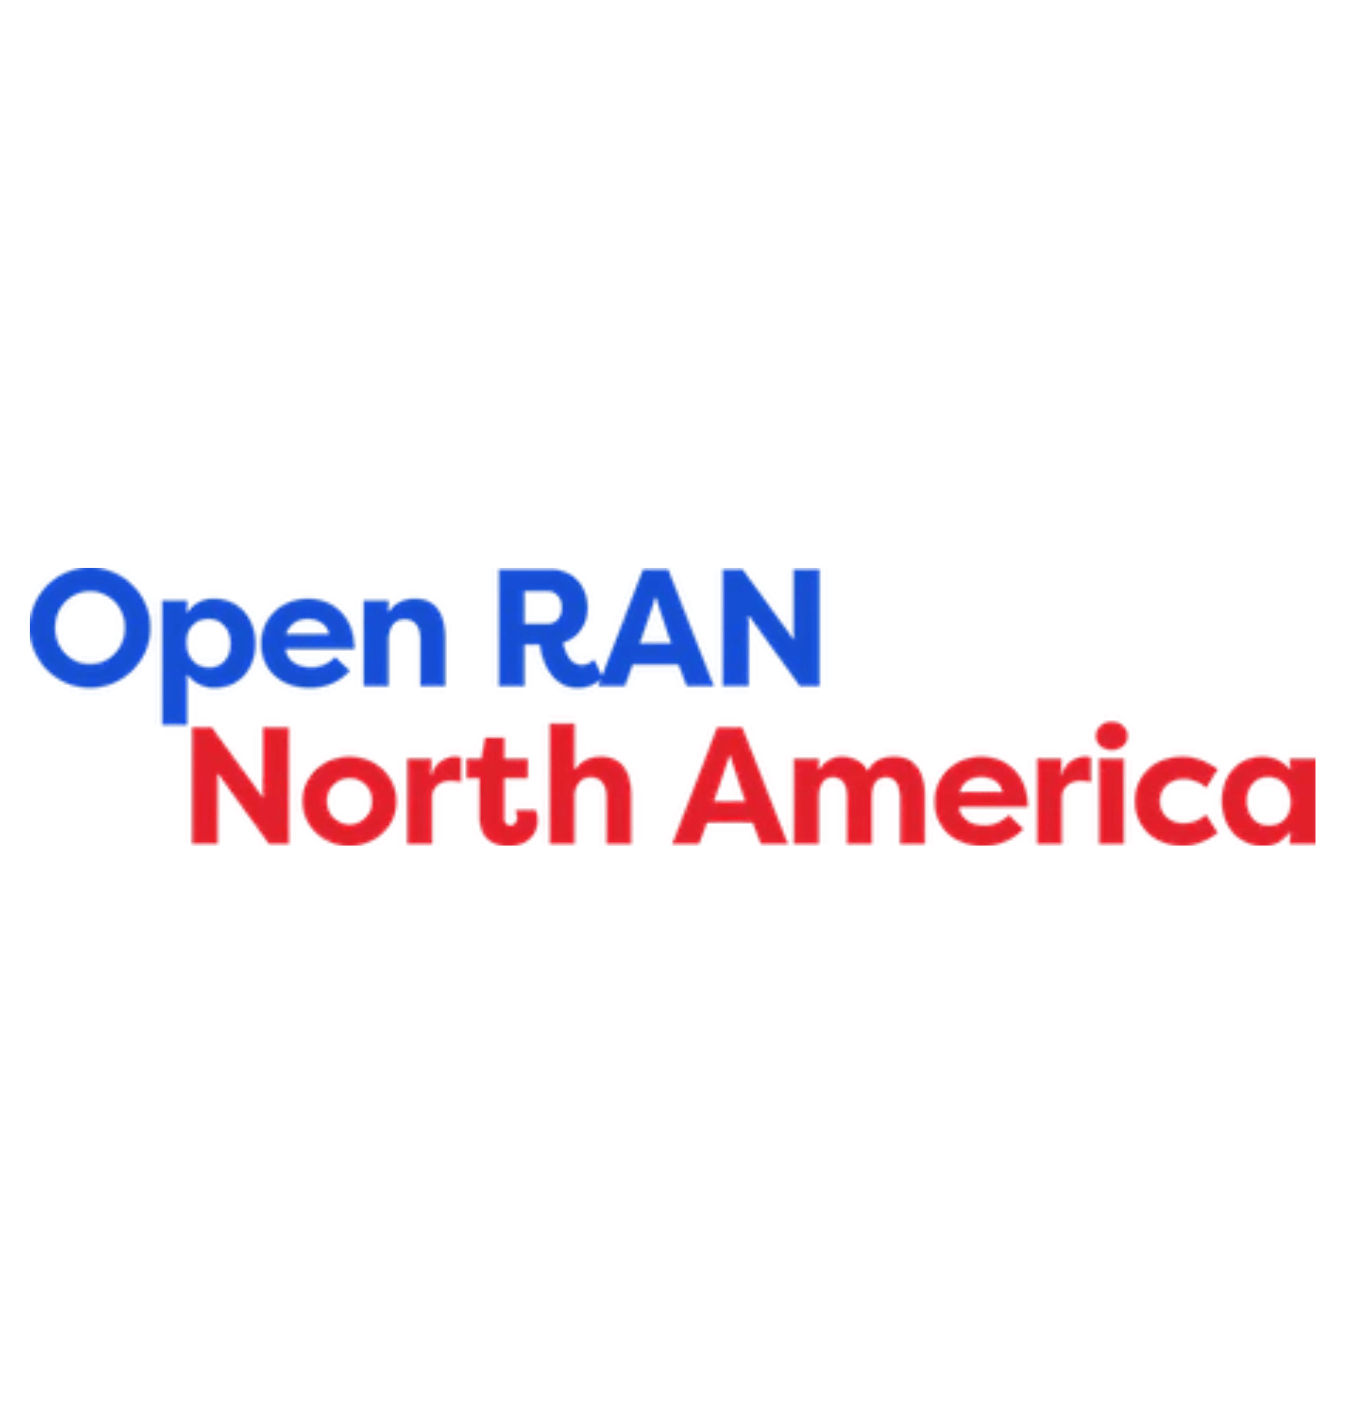 Open RAN North America logo